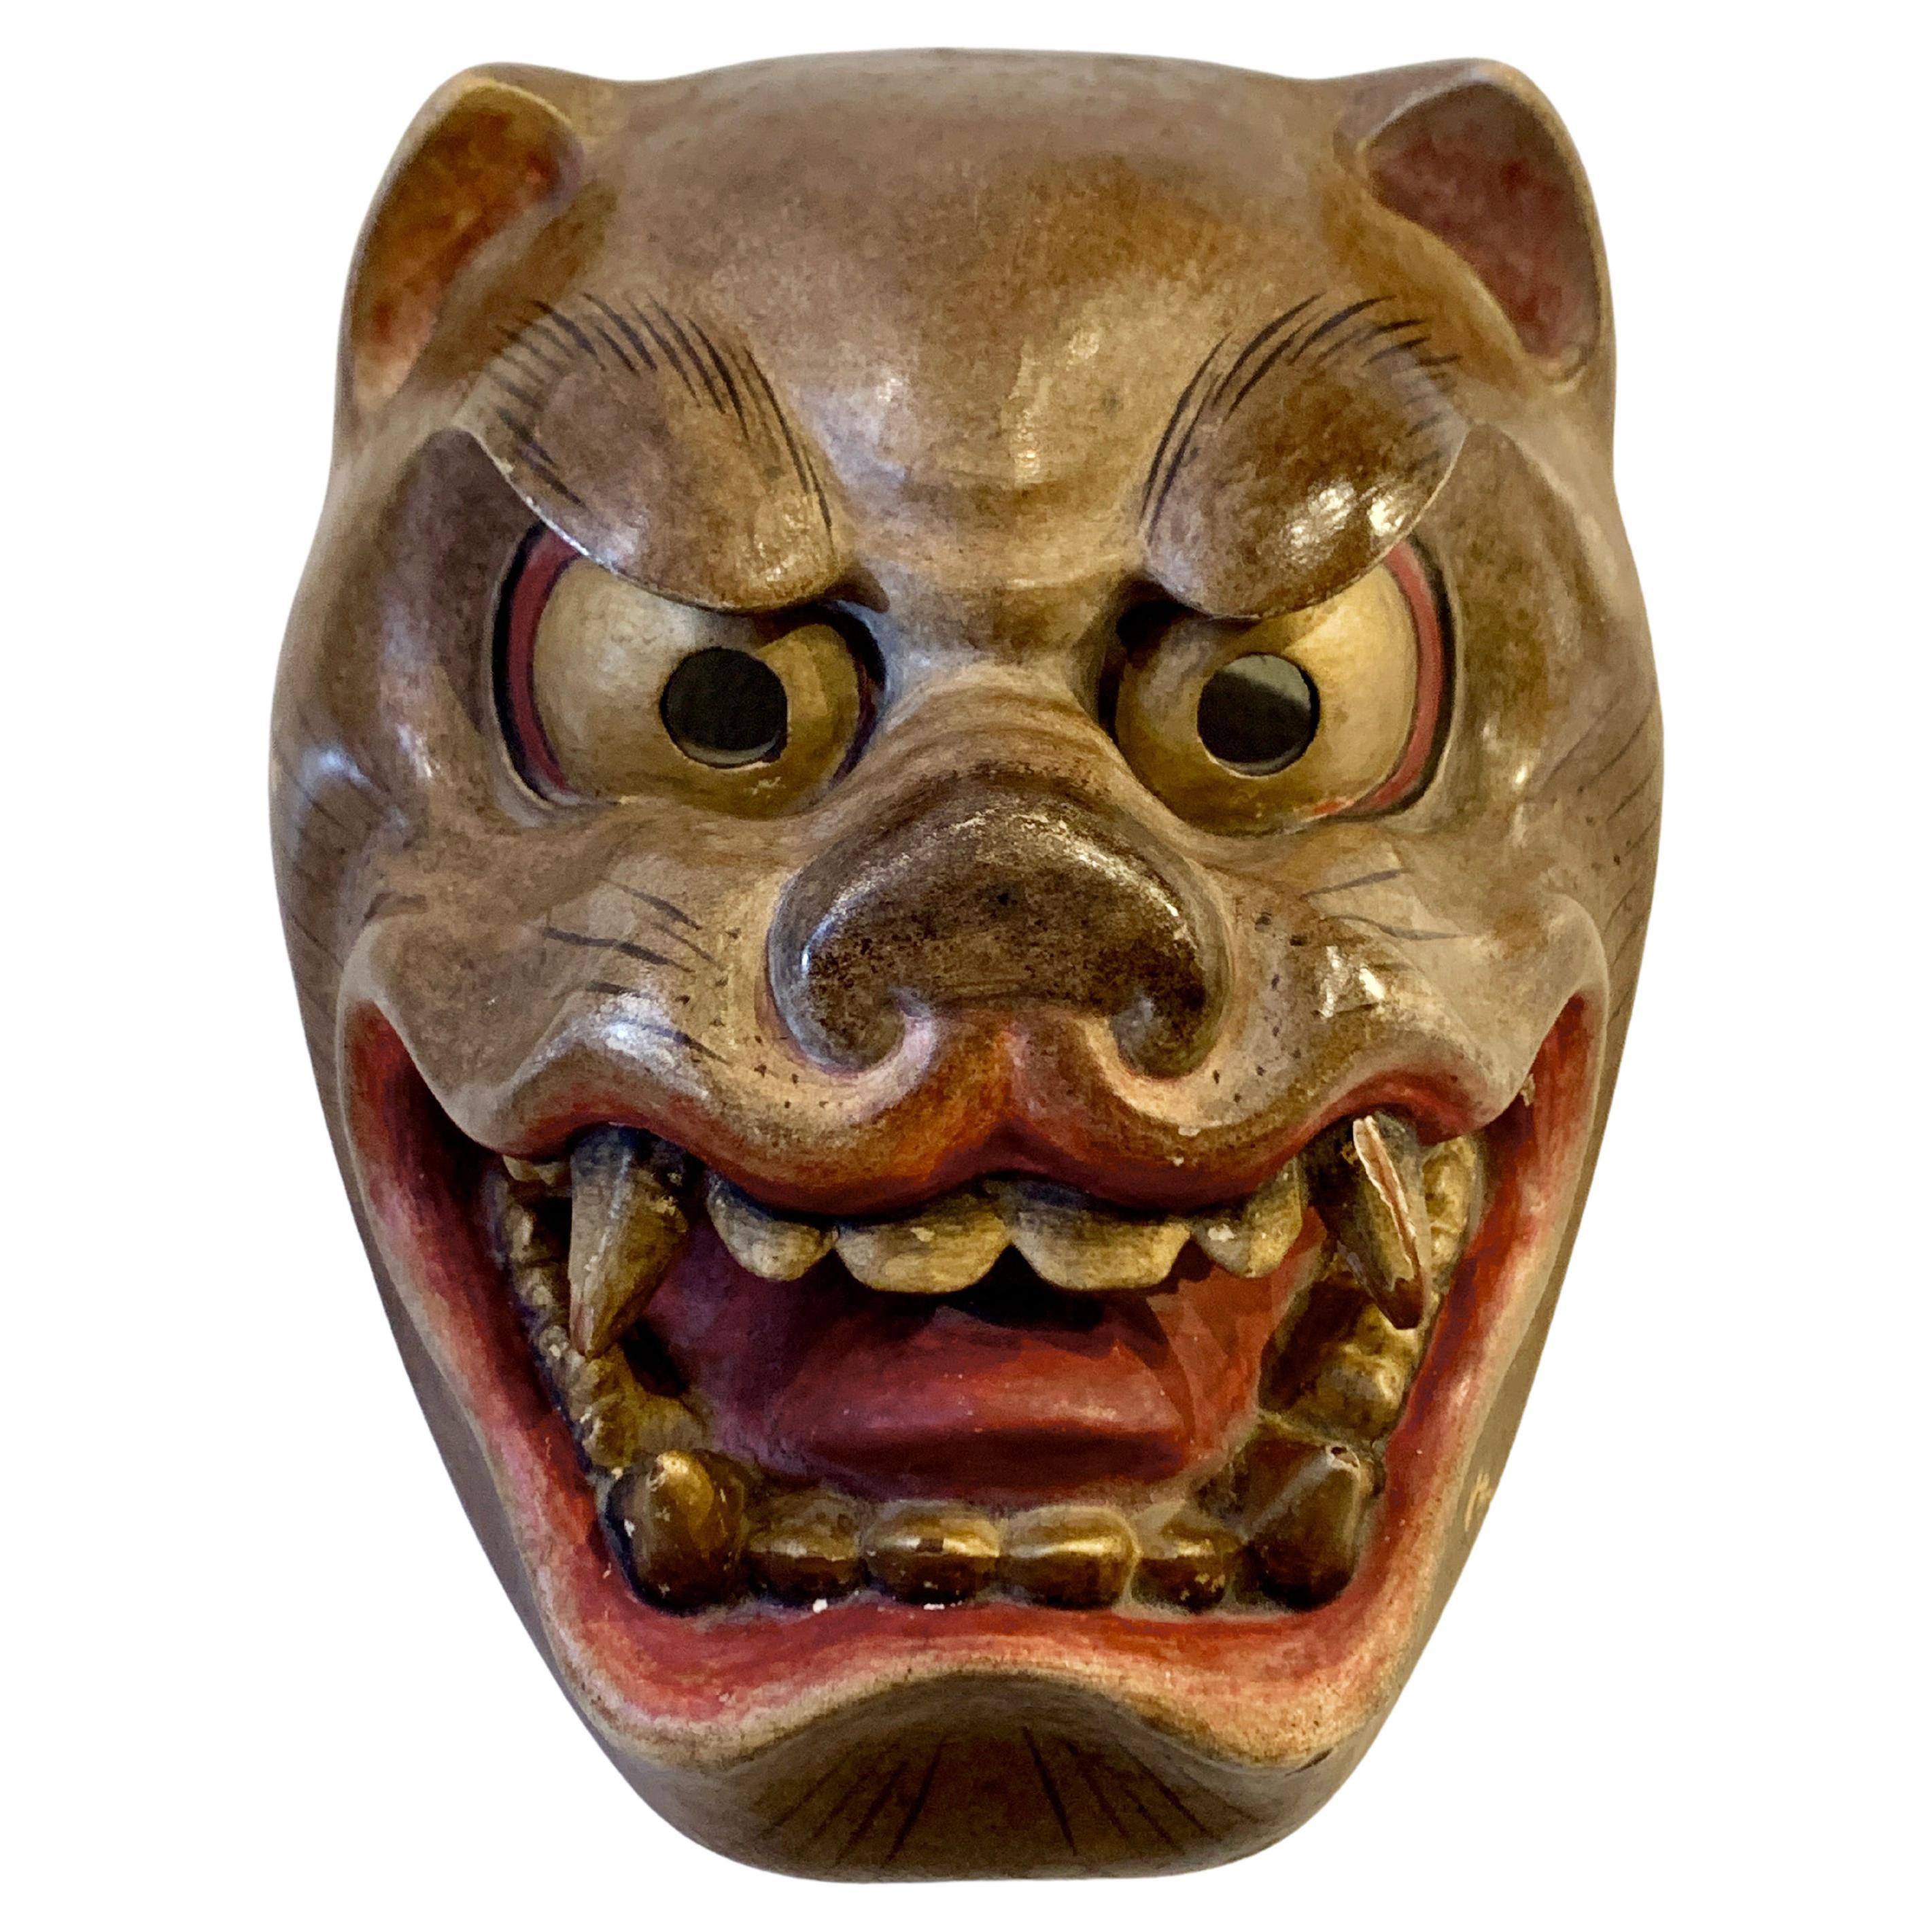 Japanese Kyogen Theater Tiger Mask, Showa Era, Mid-20th Century, Japan